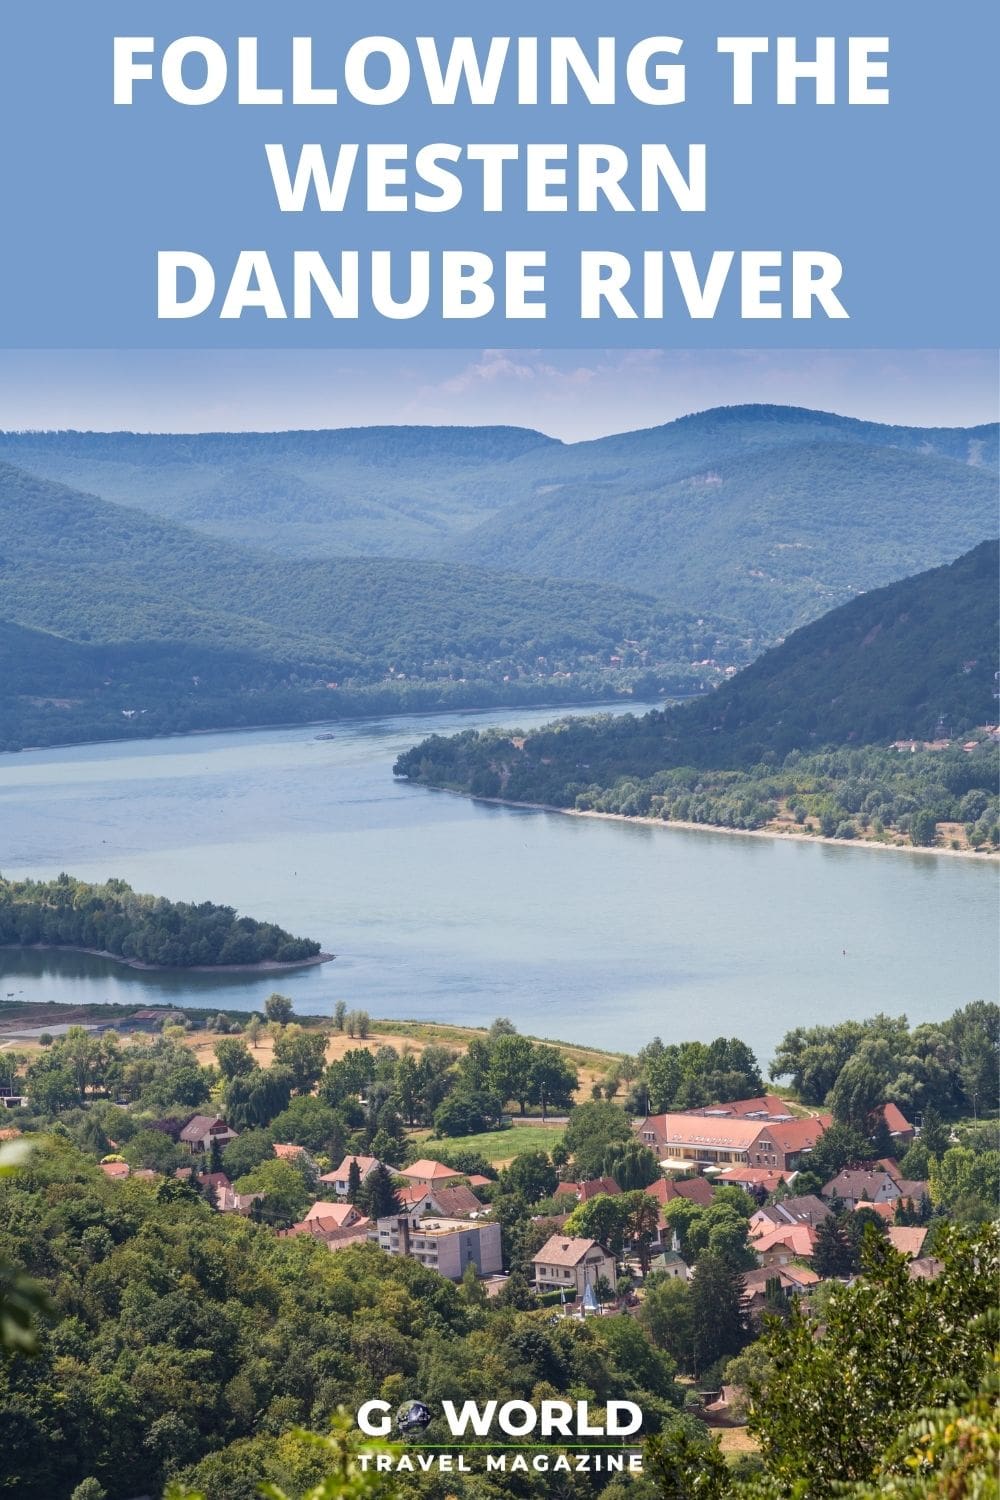 Follow the author as she walks the length of the western Danube River through Germany, Austria, Hungary, Slovakia and Croatia. #riverdanube #europetravel